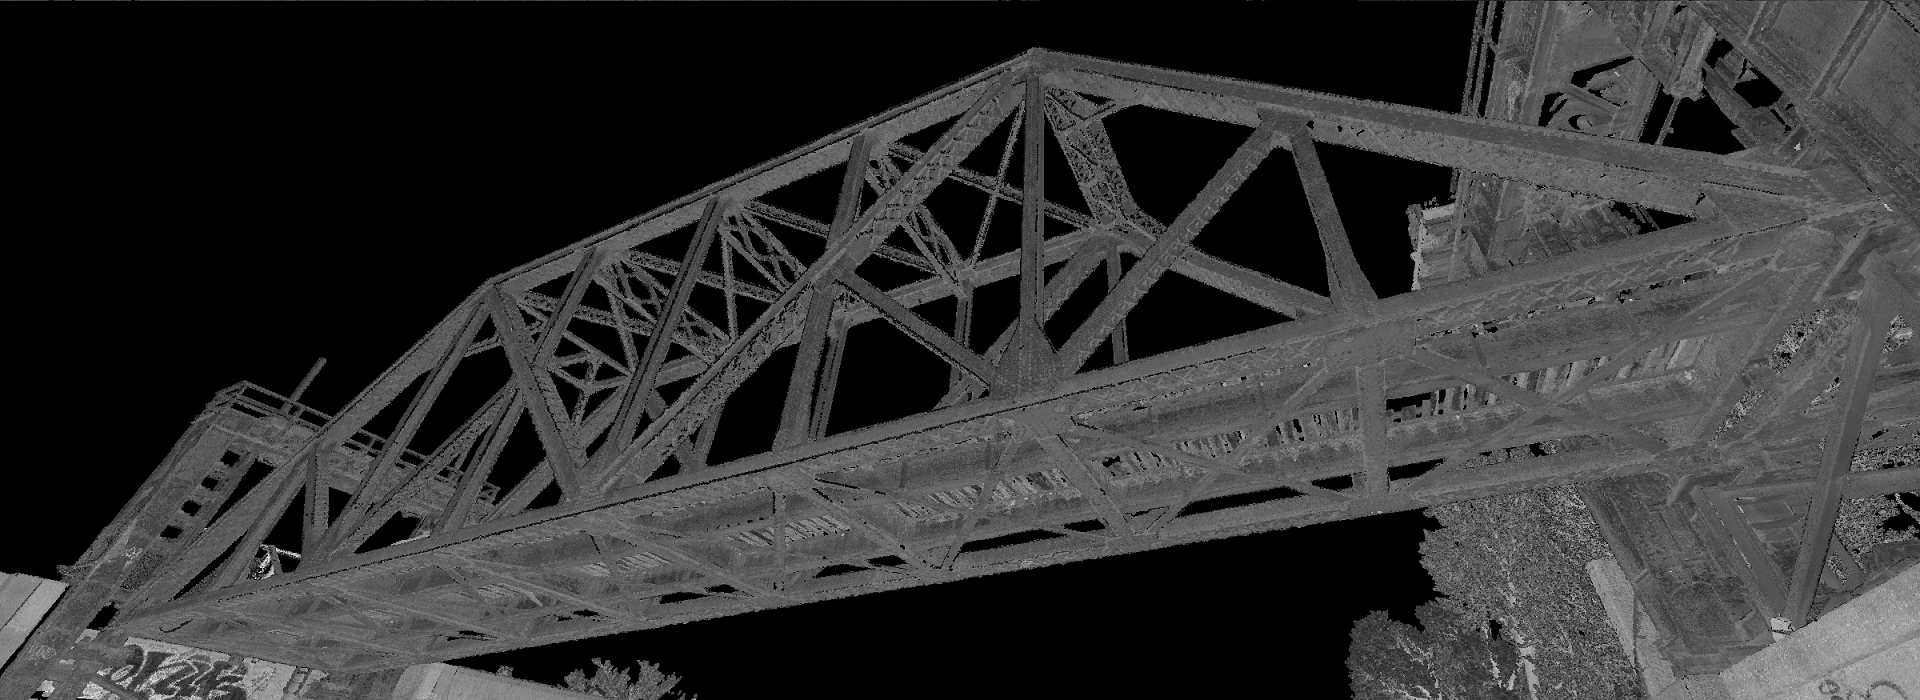 LiDAR / Laser scan of the Rock Island Bridge in Kansas City. The bridge is a steel Pennsylvania truss railroad bridge that began service in 1905. It spans 702 feet over the Kansas river near the old stockyards in Kansas City.